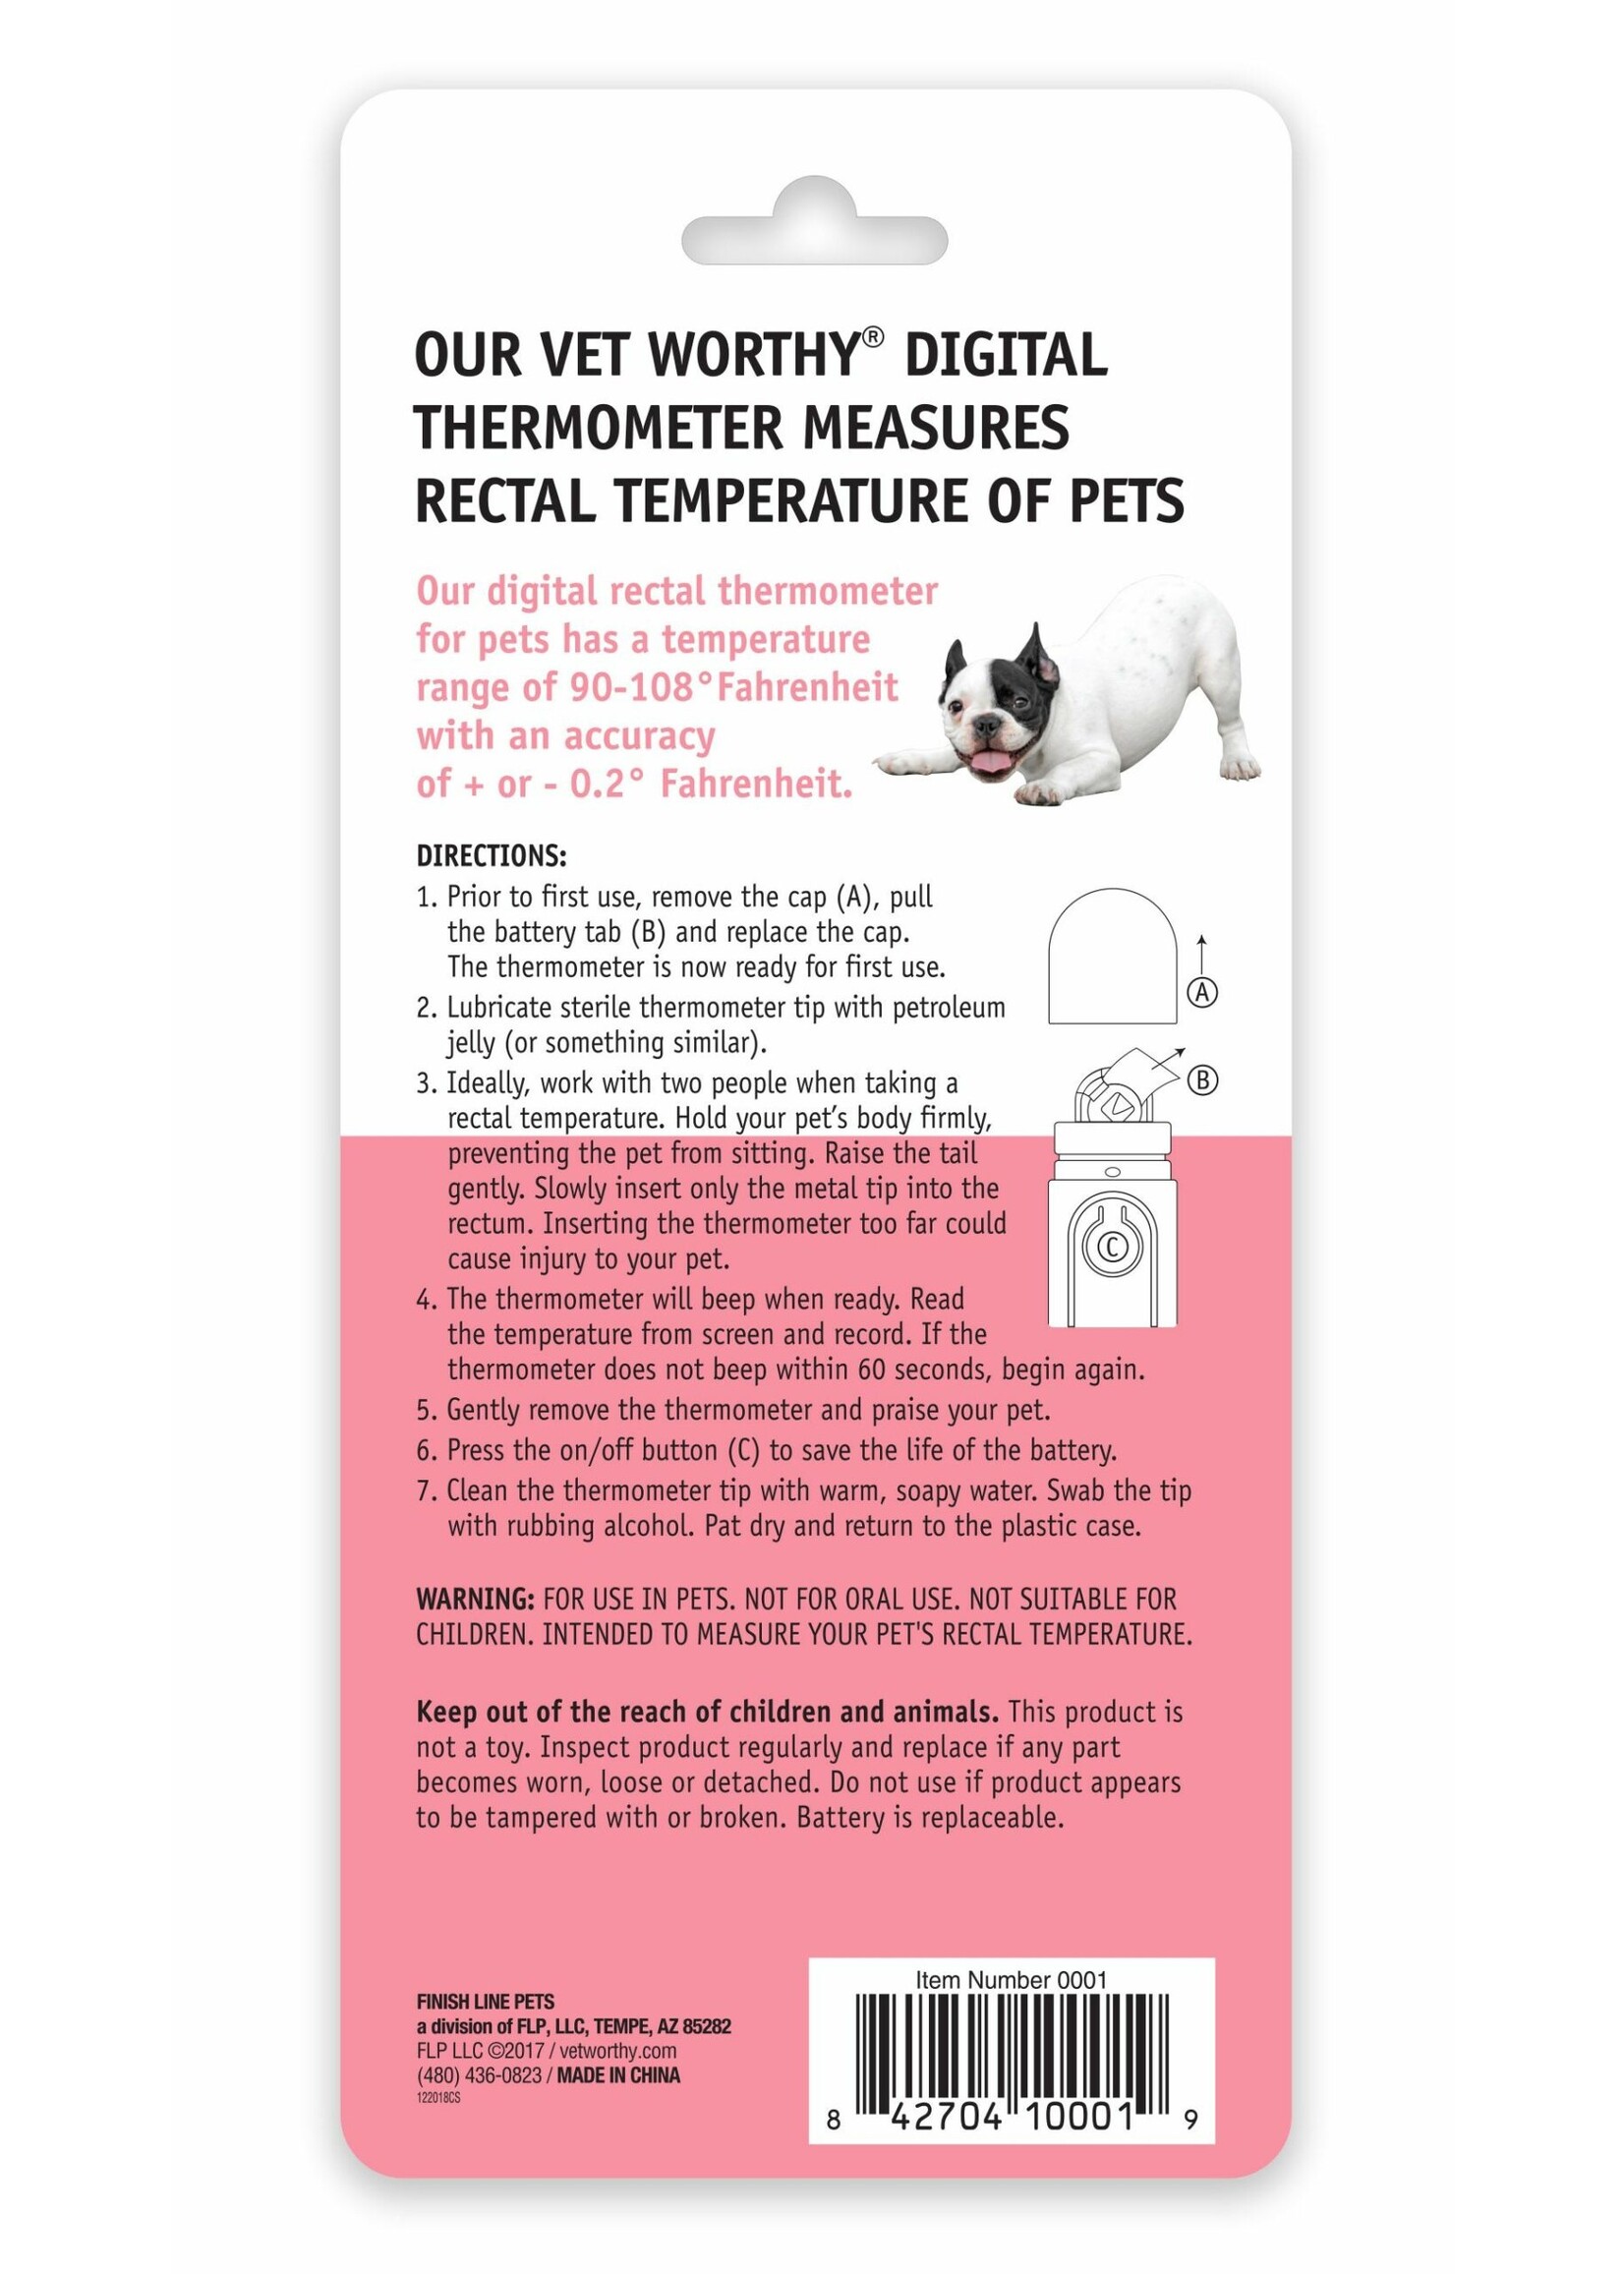 Vet Worthy Vet Worthy Pet Digital Thermometer